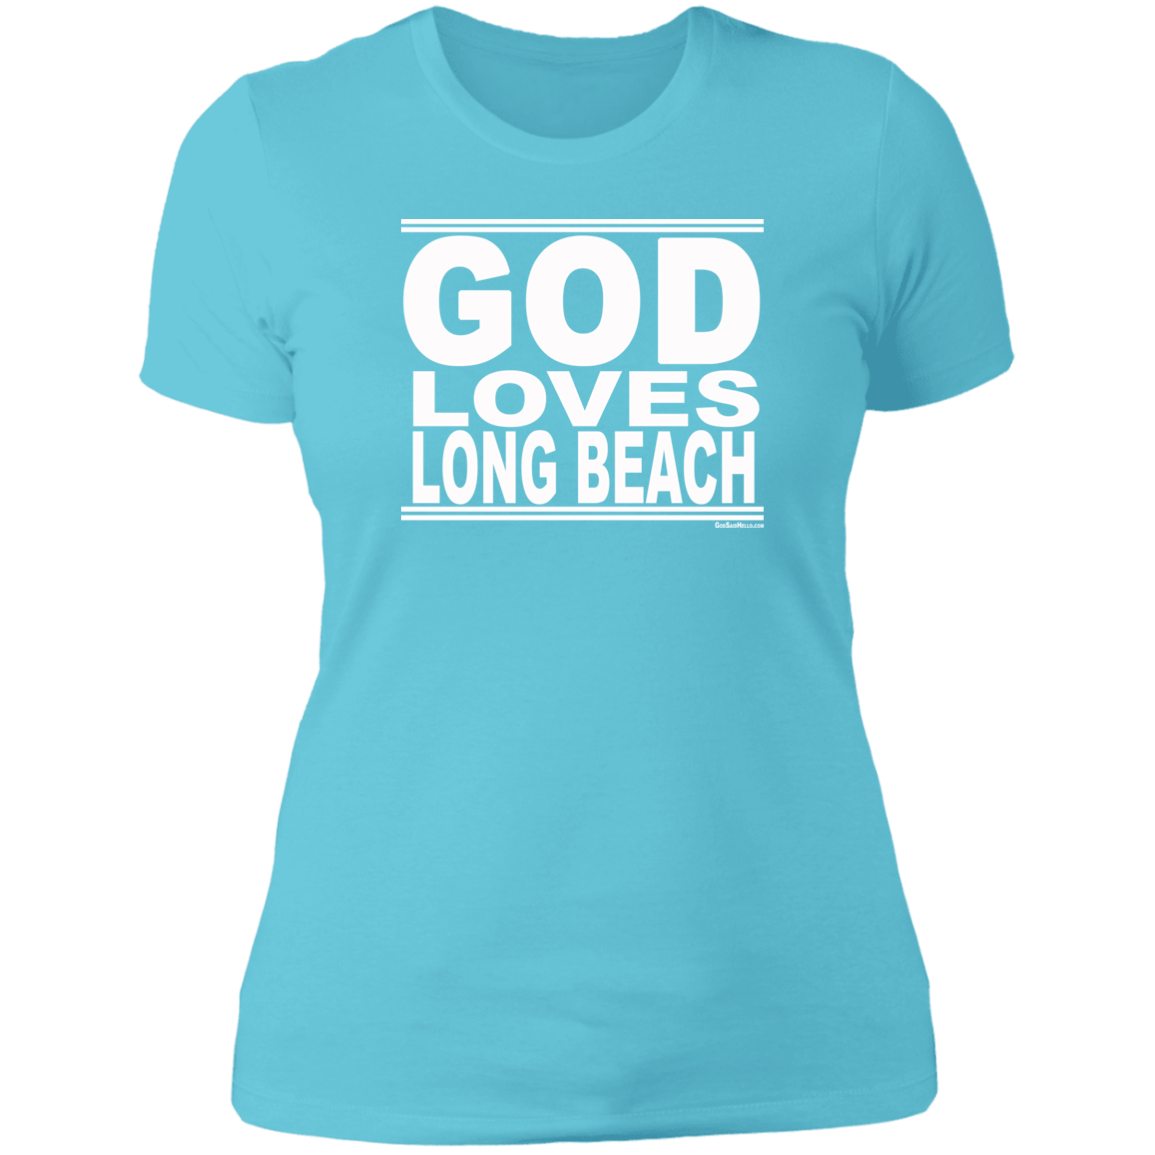 #GodLovesLongBeach - Women's Shortsleeve Tee